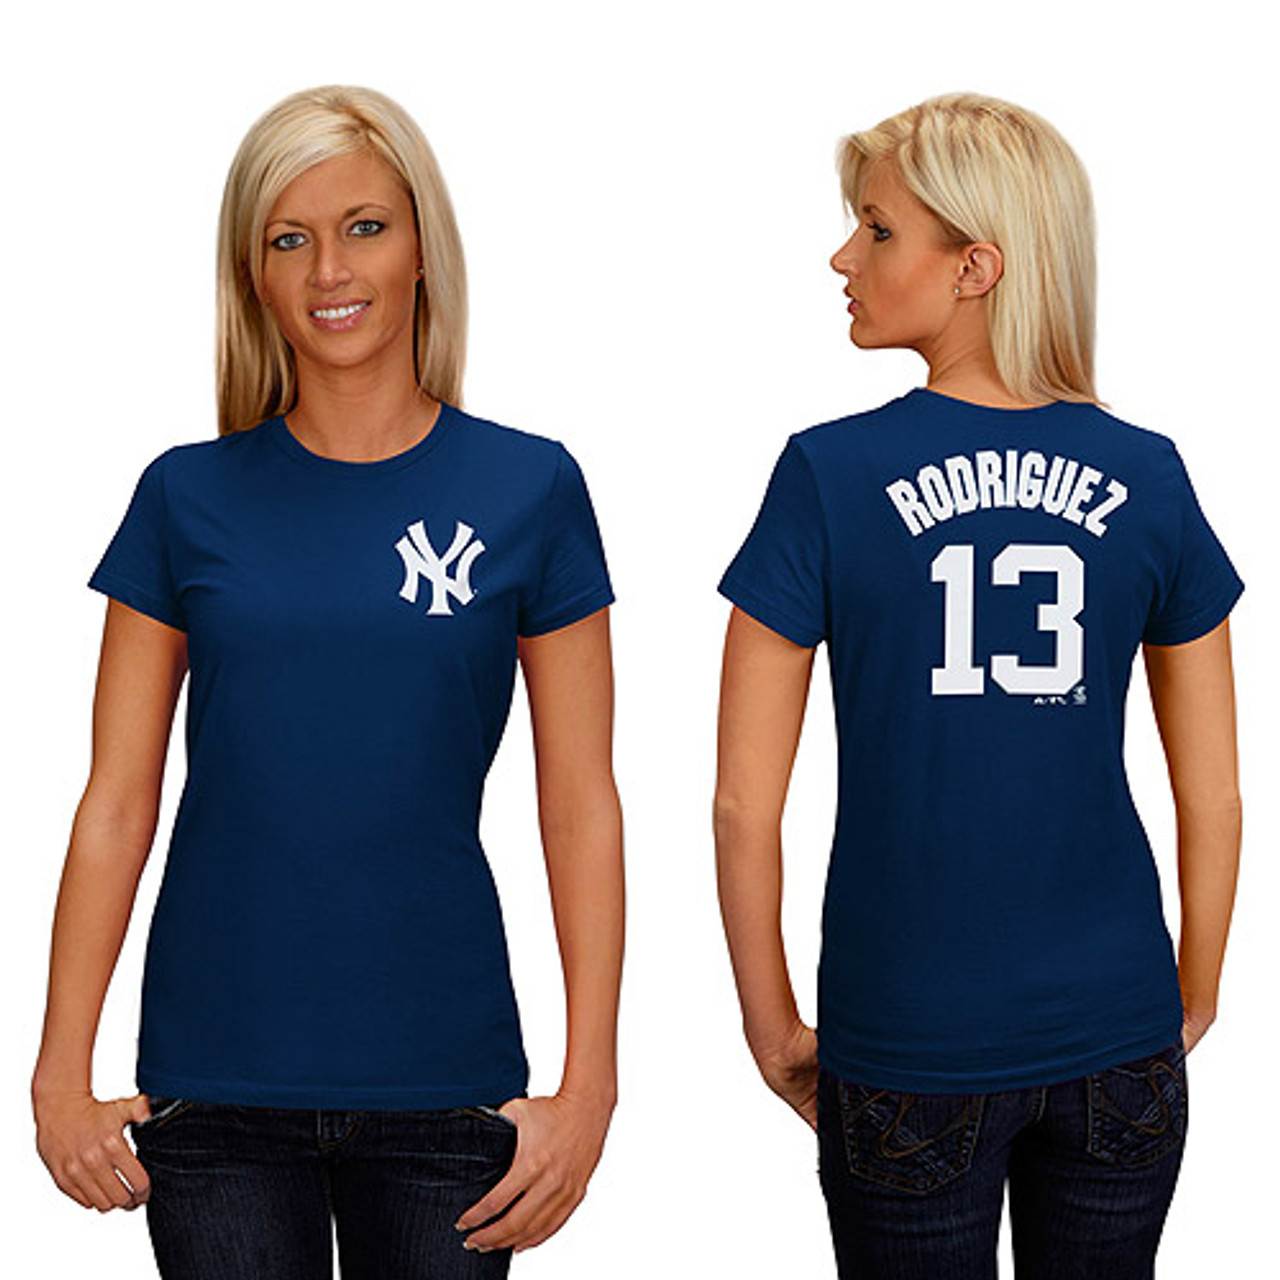 New York Yankees Ladies T-Shirt, Ladies Yankees Shirts, Yankees